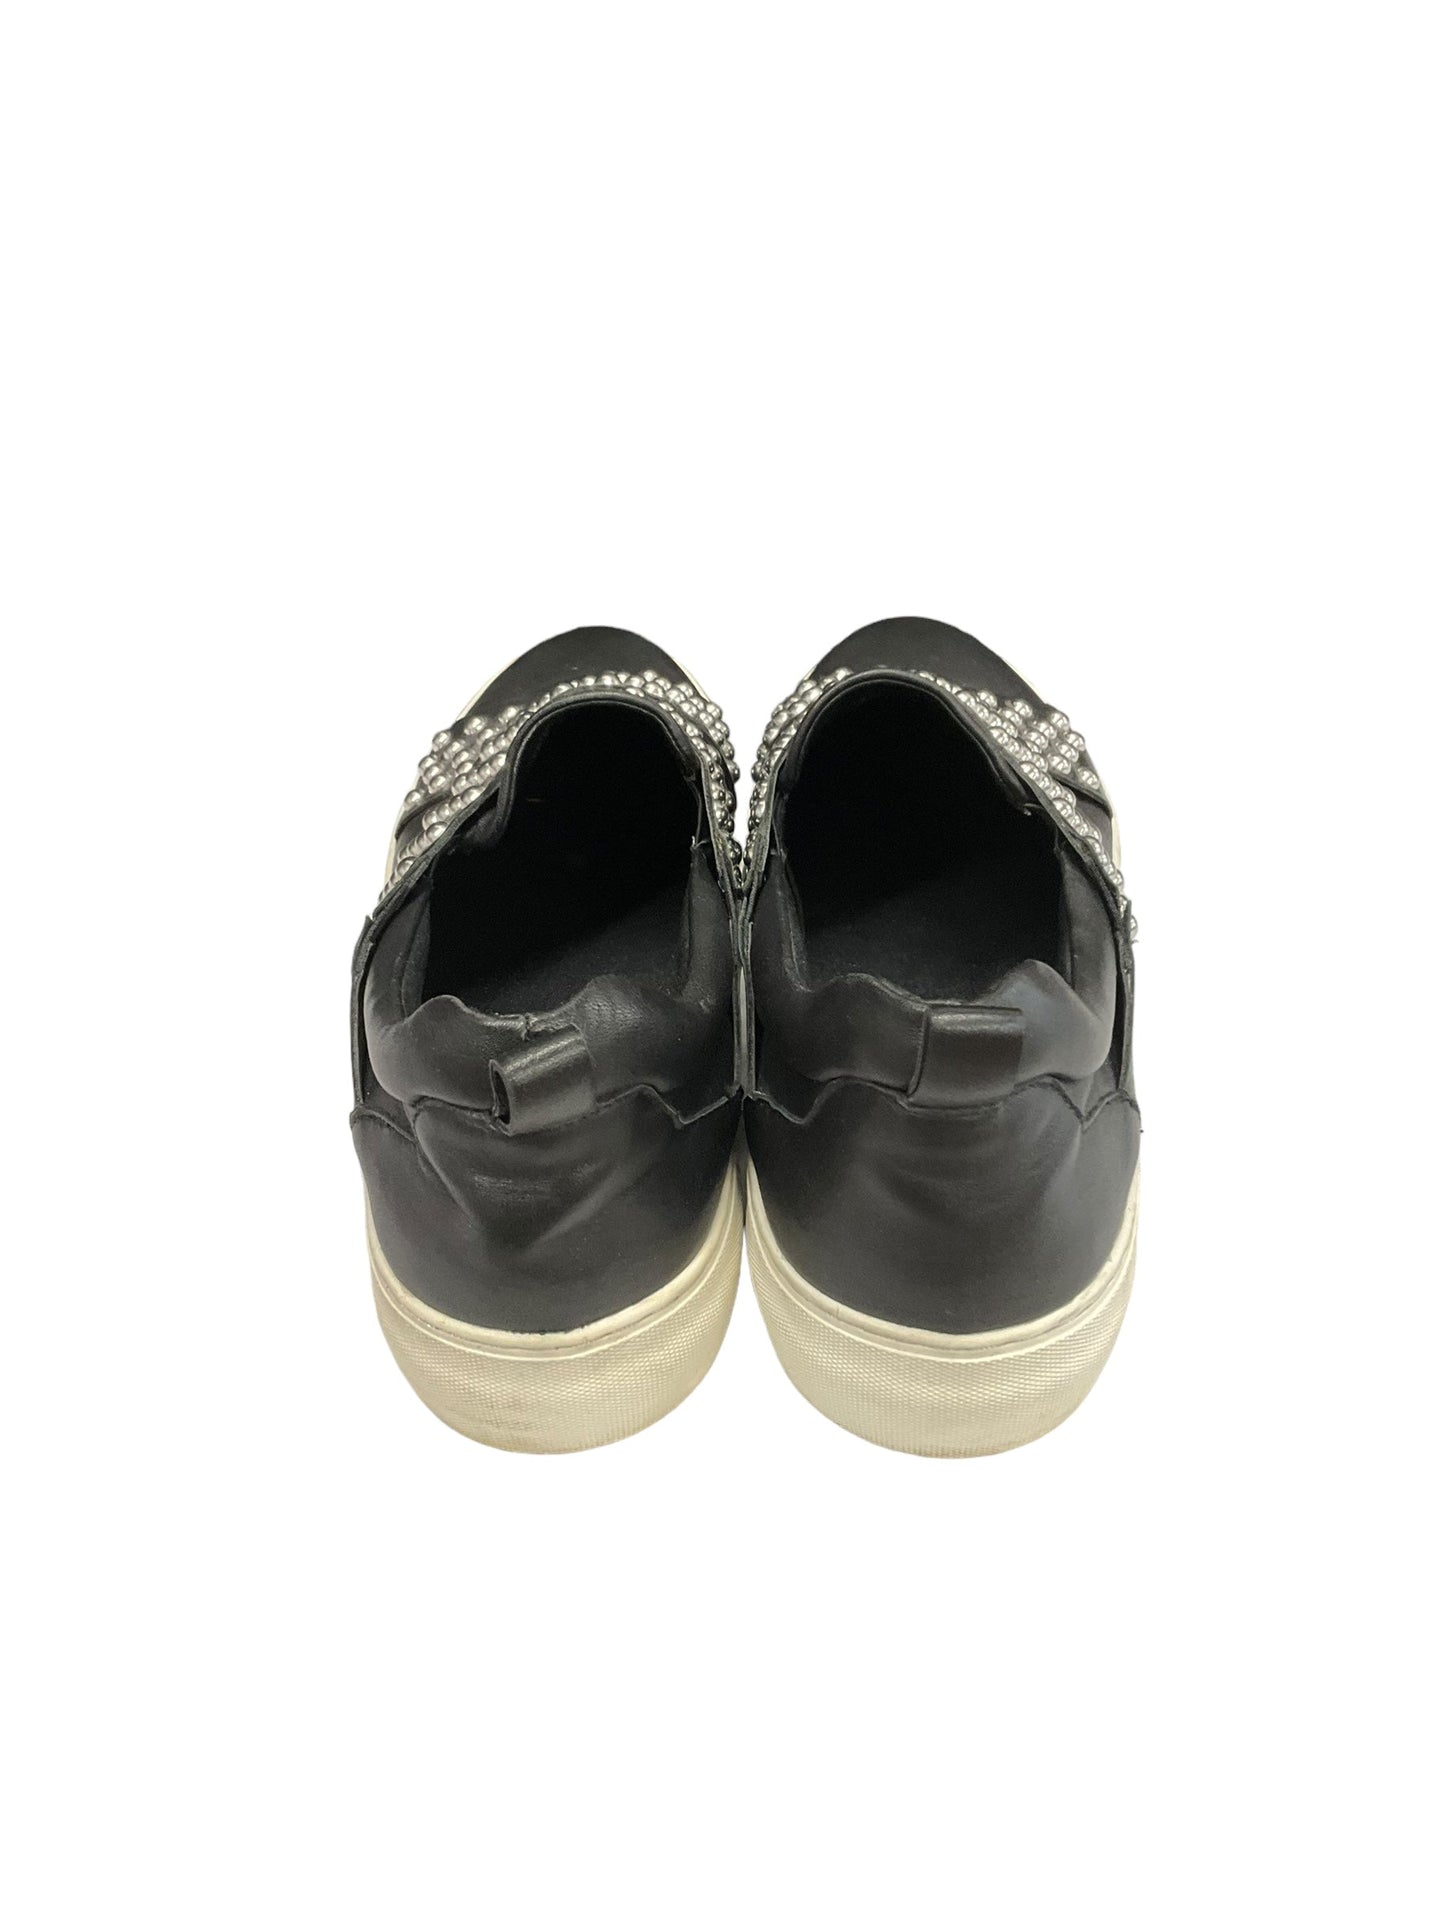 Black Shoes Flats J Slides, Size 10